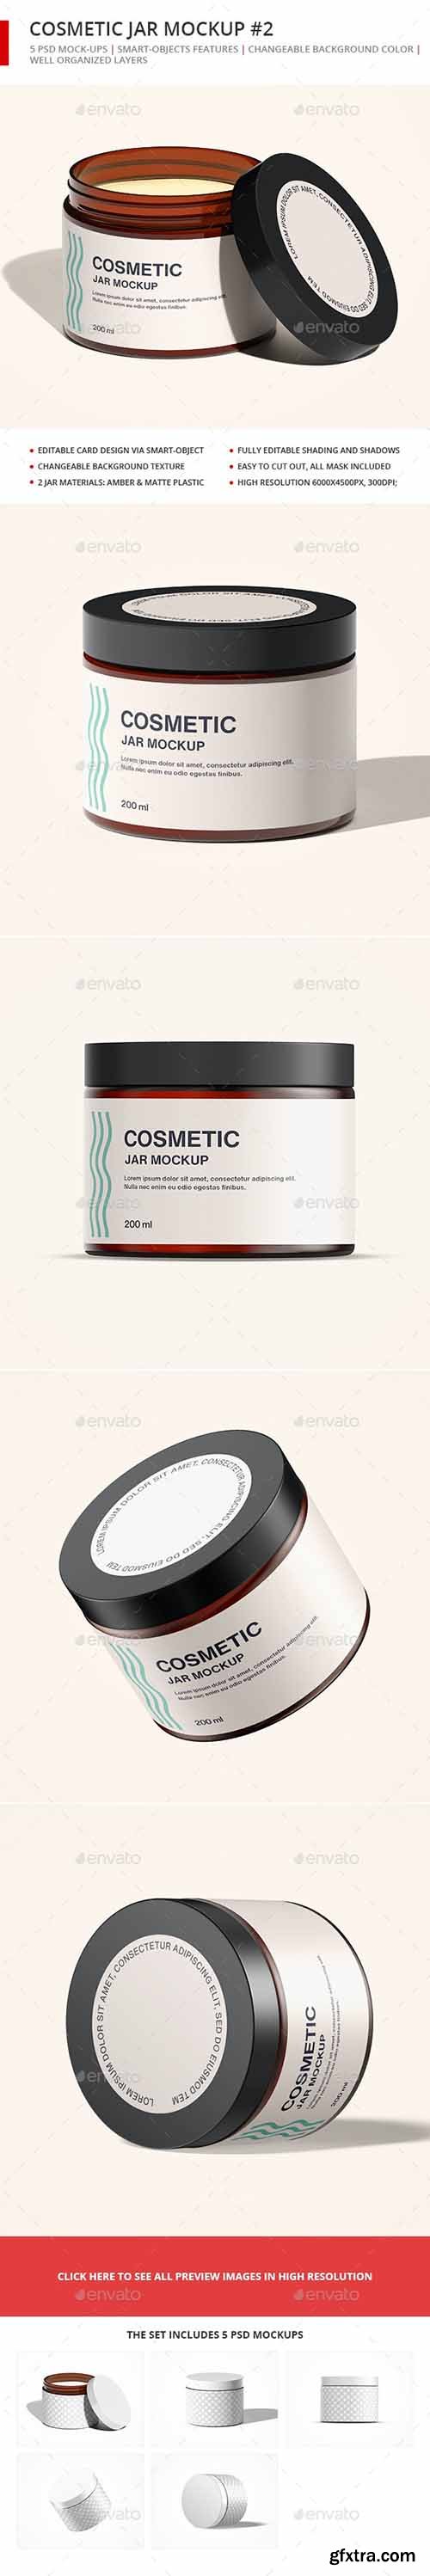 GraphicRiver - Cosmetic Jar Mockup Set 2 26730348